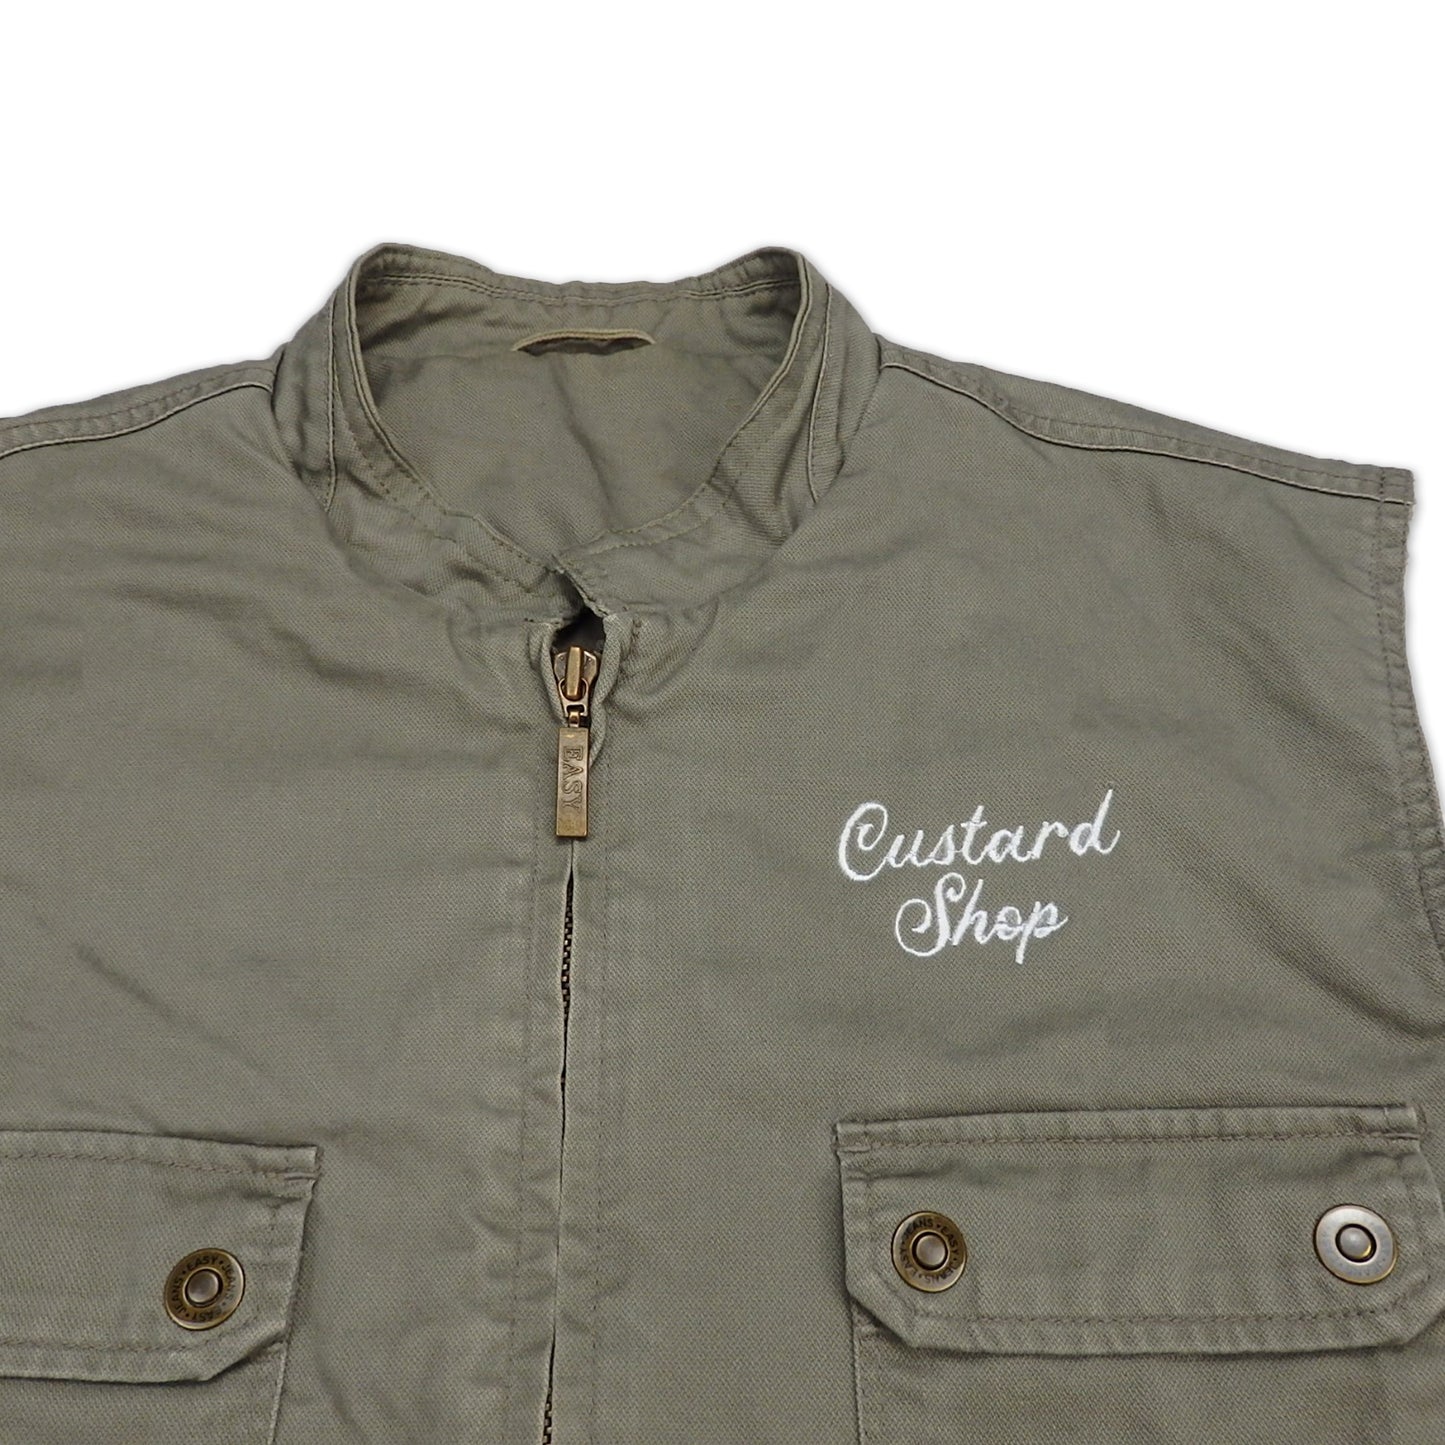 Custard Reclaimed Pocket Vest | Size Large